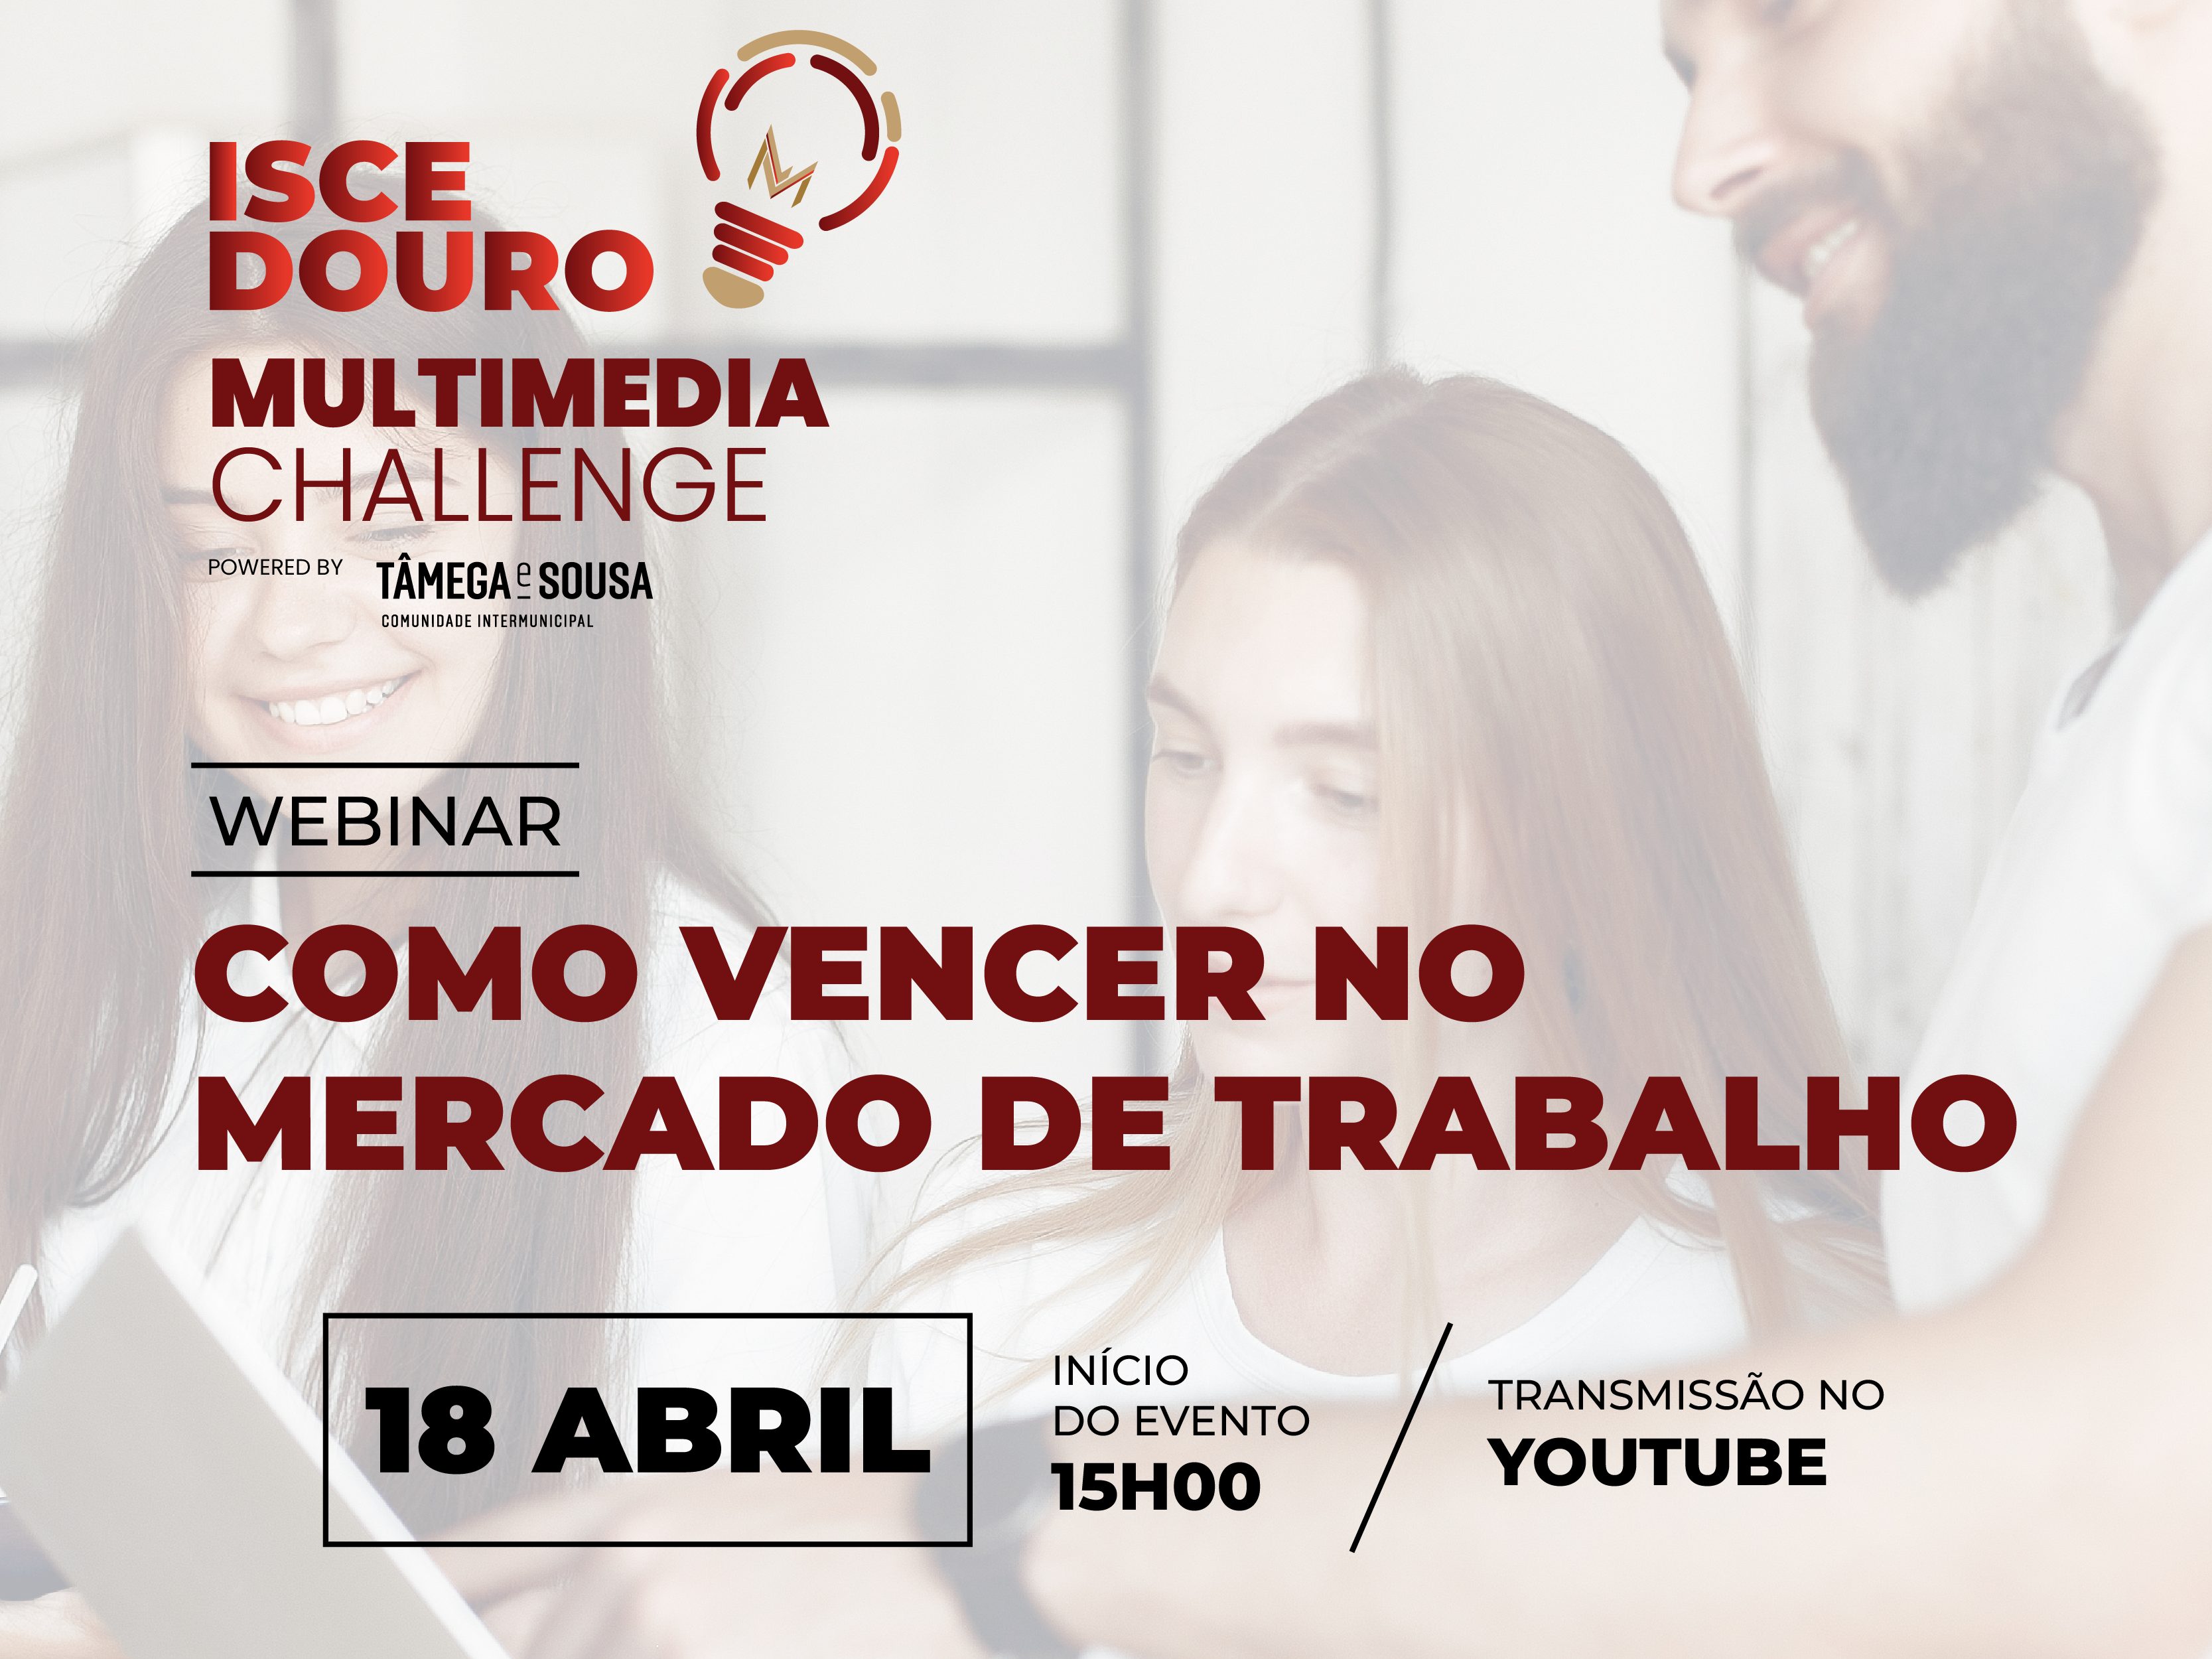 ISCE Douro Multimedia Challenge Webinar